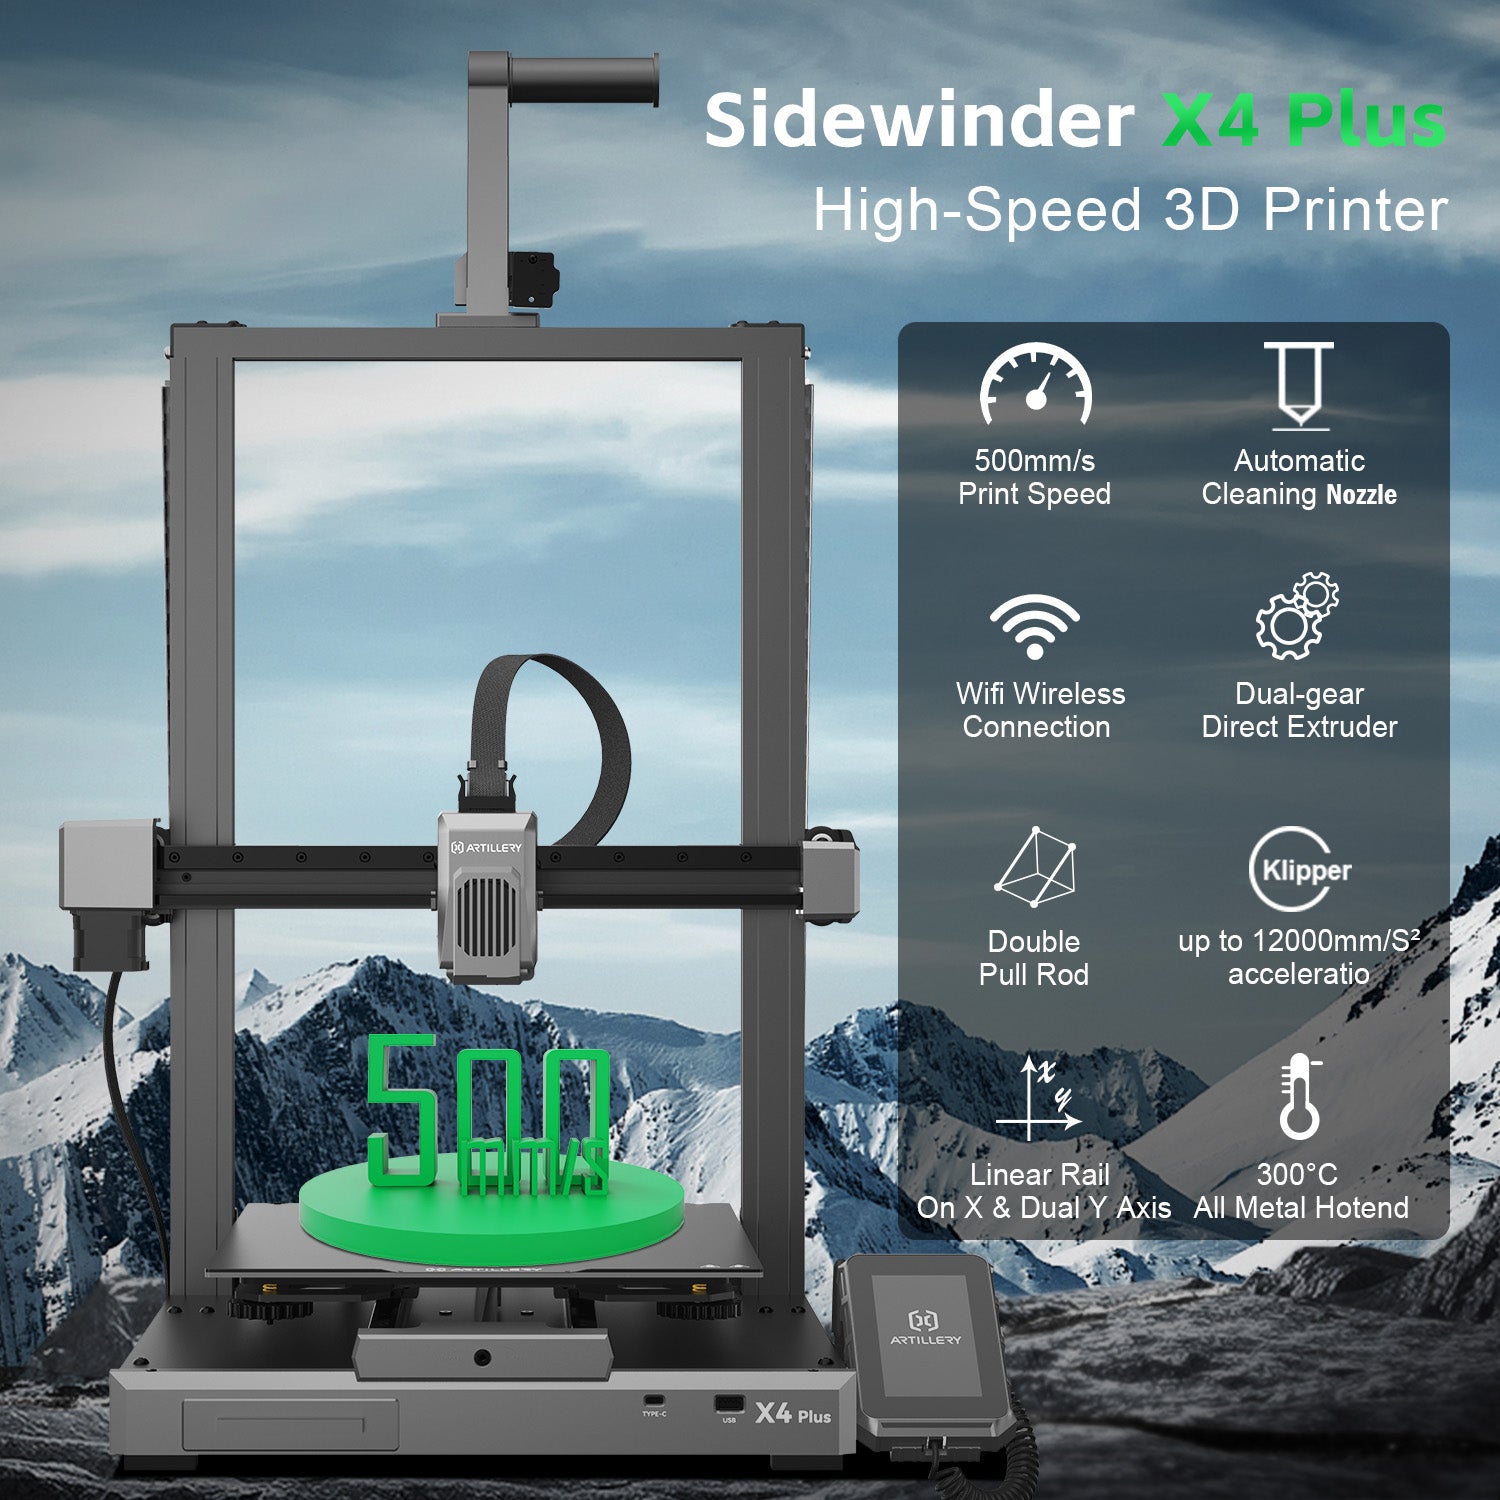 Sidewinder X4 Plus